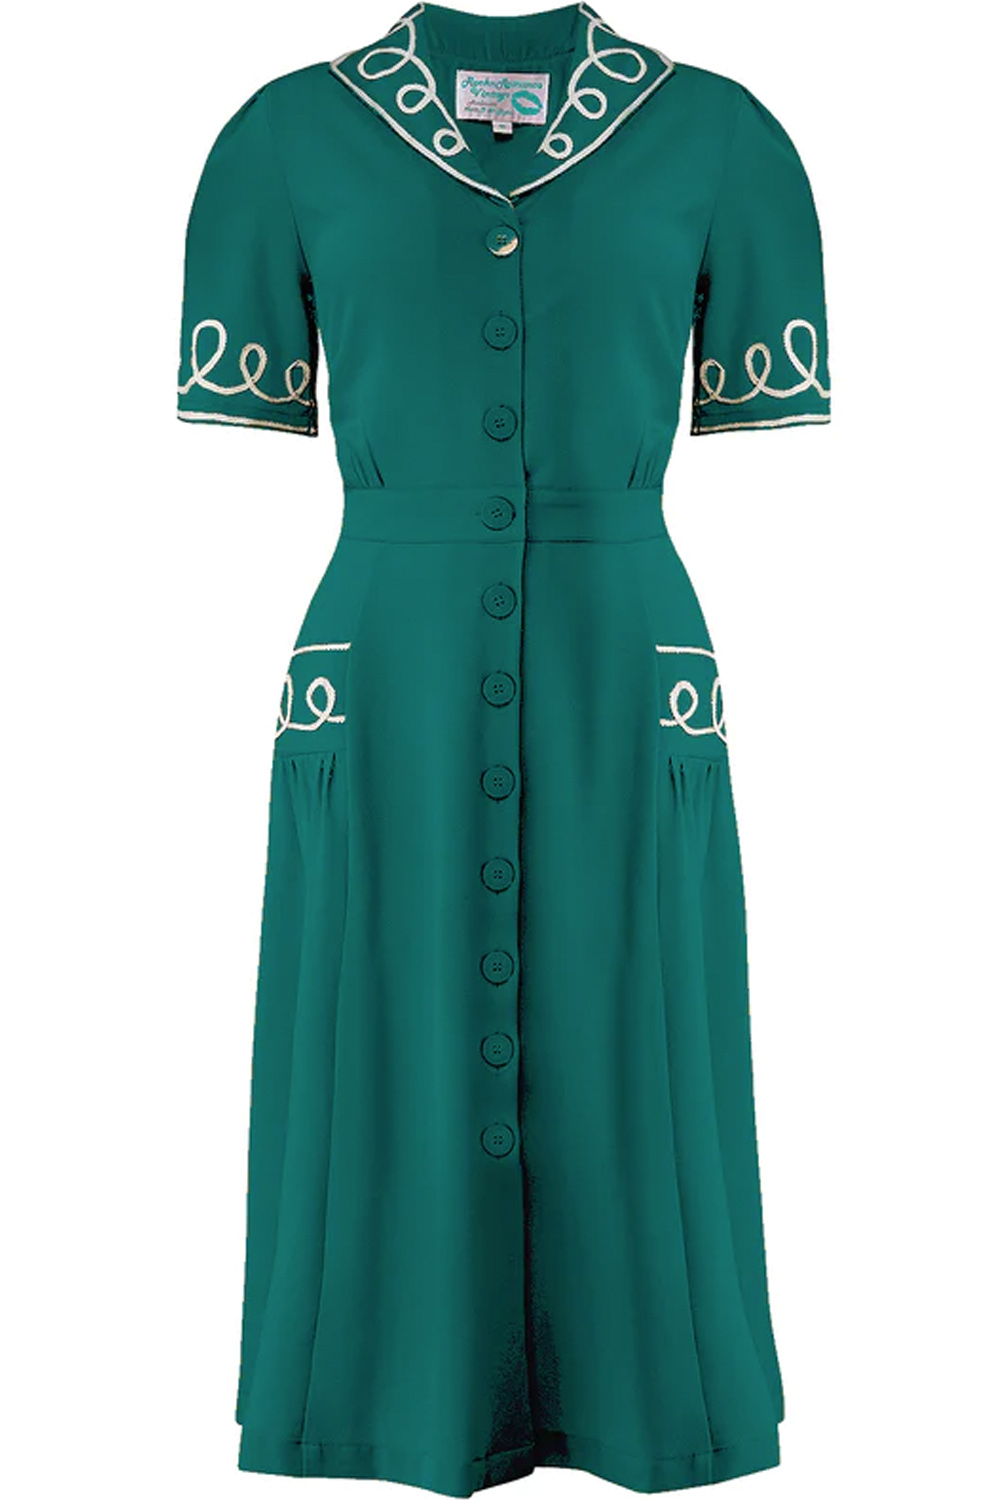 40er retro Hemdblusenkleid RicRac Vintage style Kleid kurzarm petrol